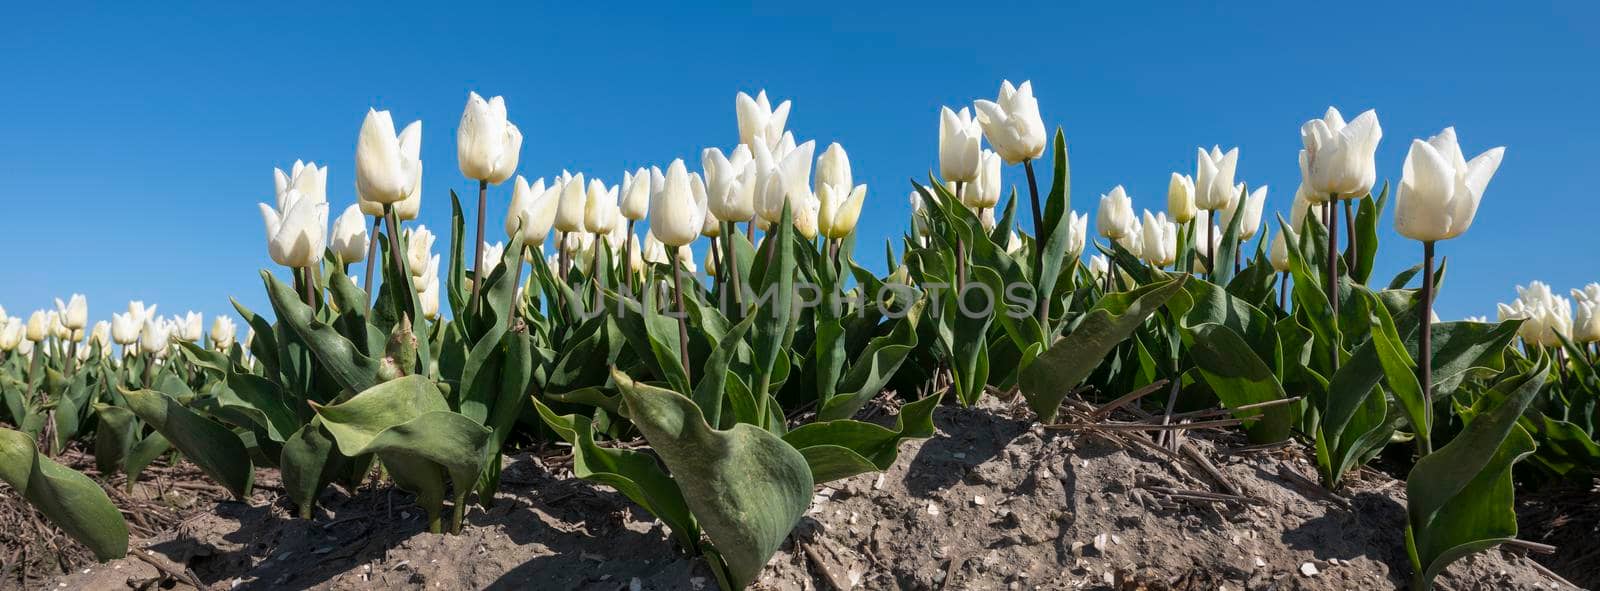 white tulips in field under blue sky by ahavelaar